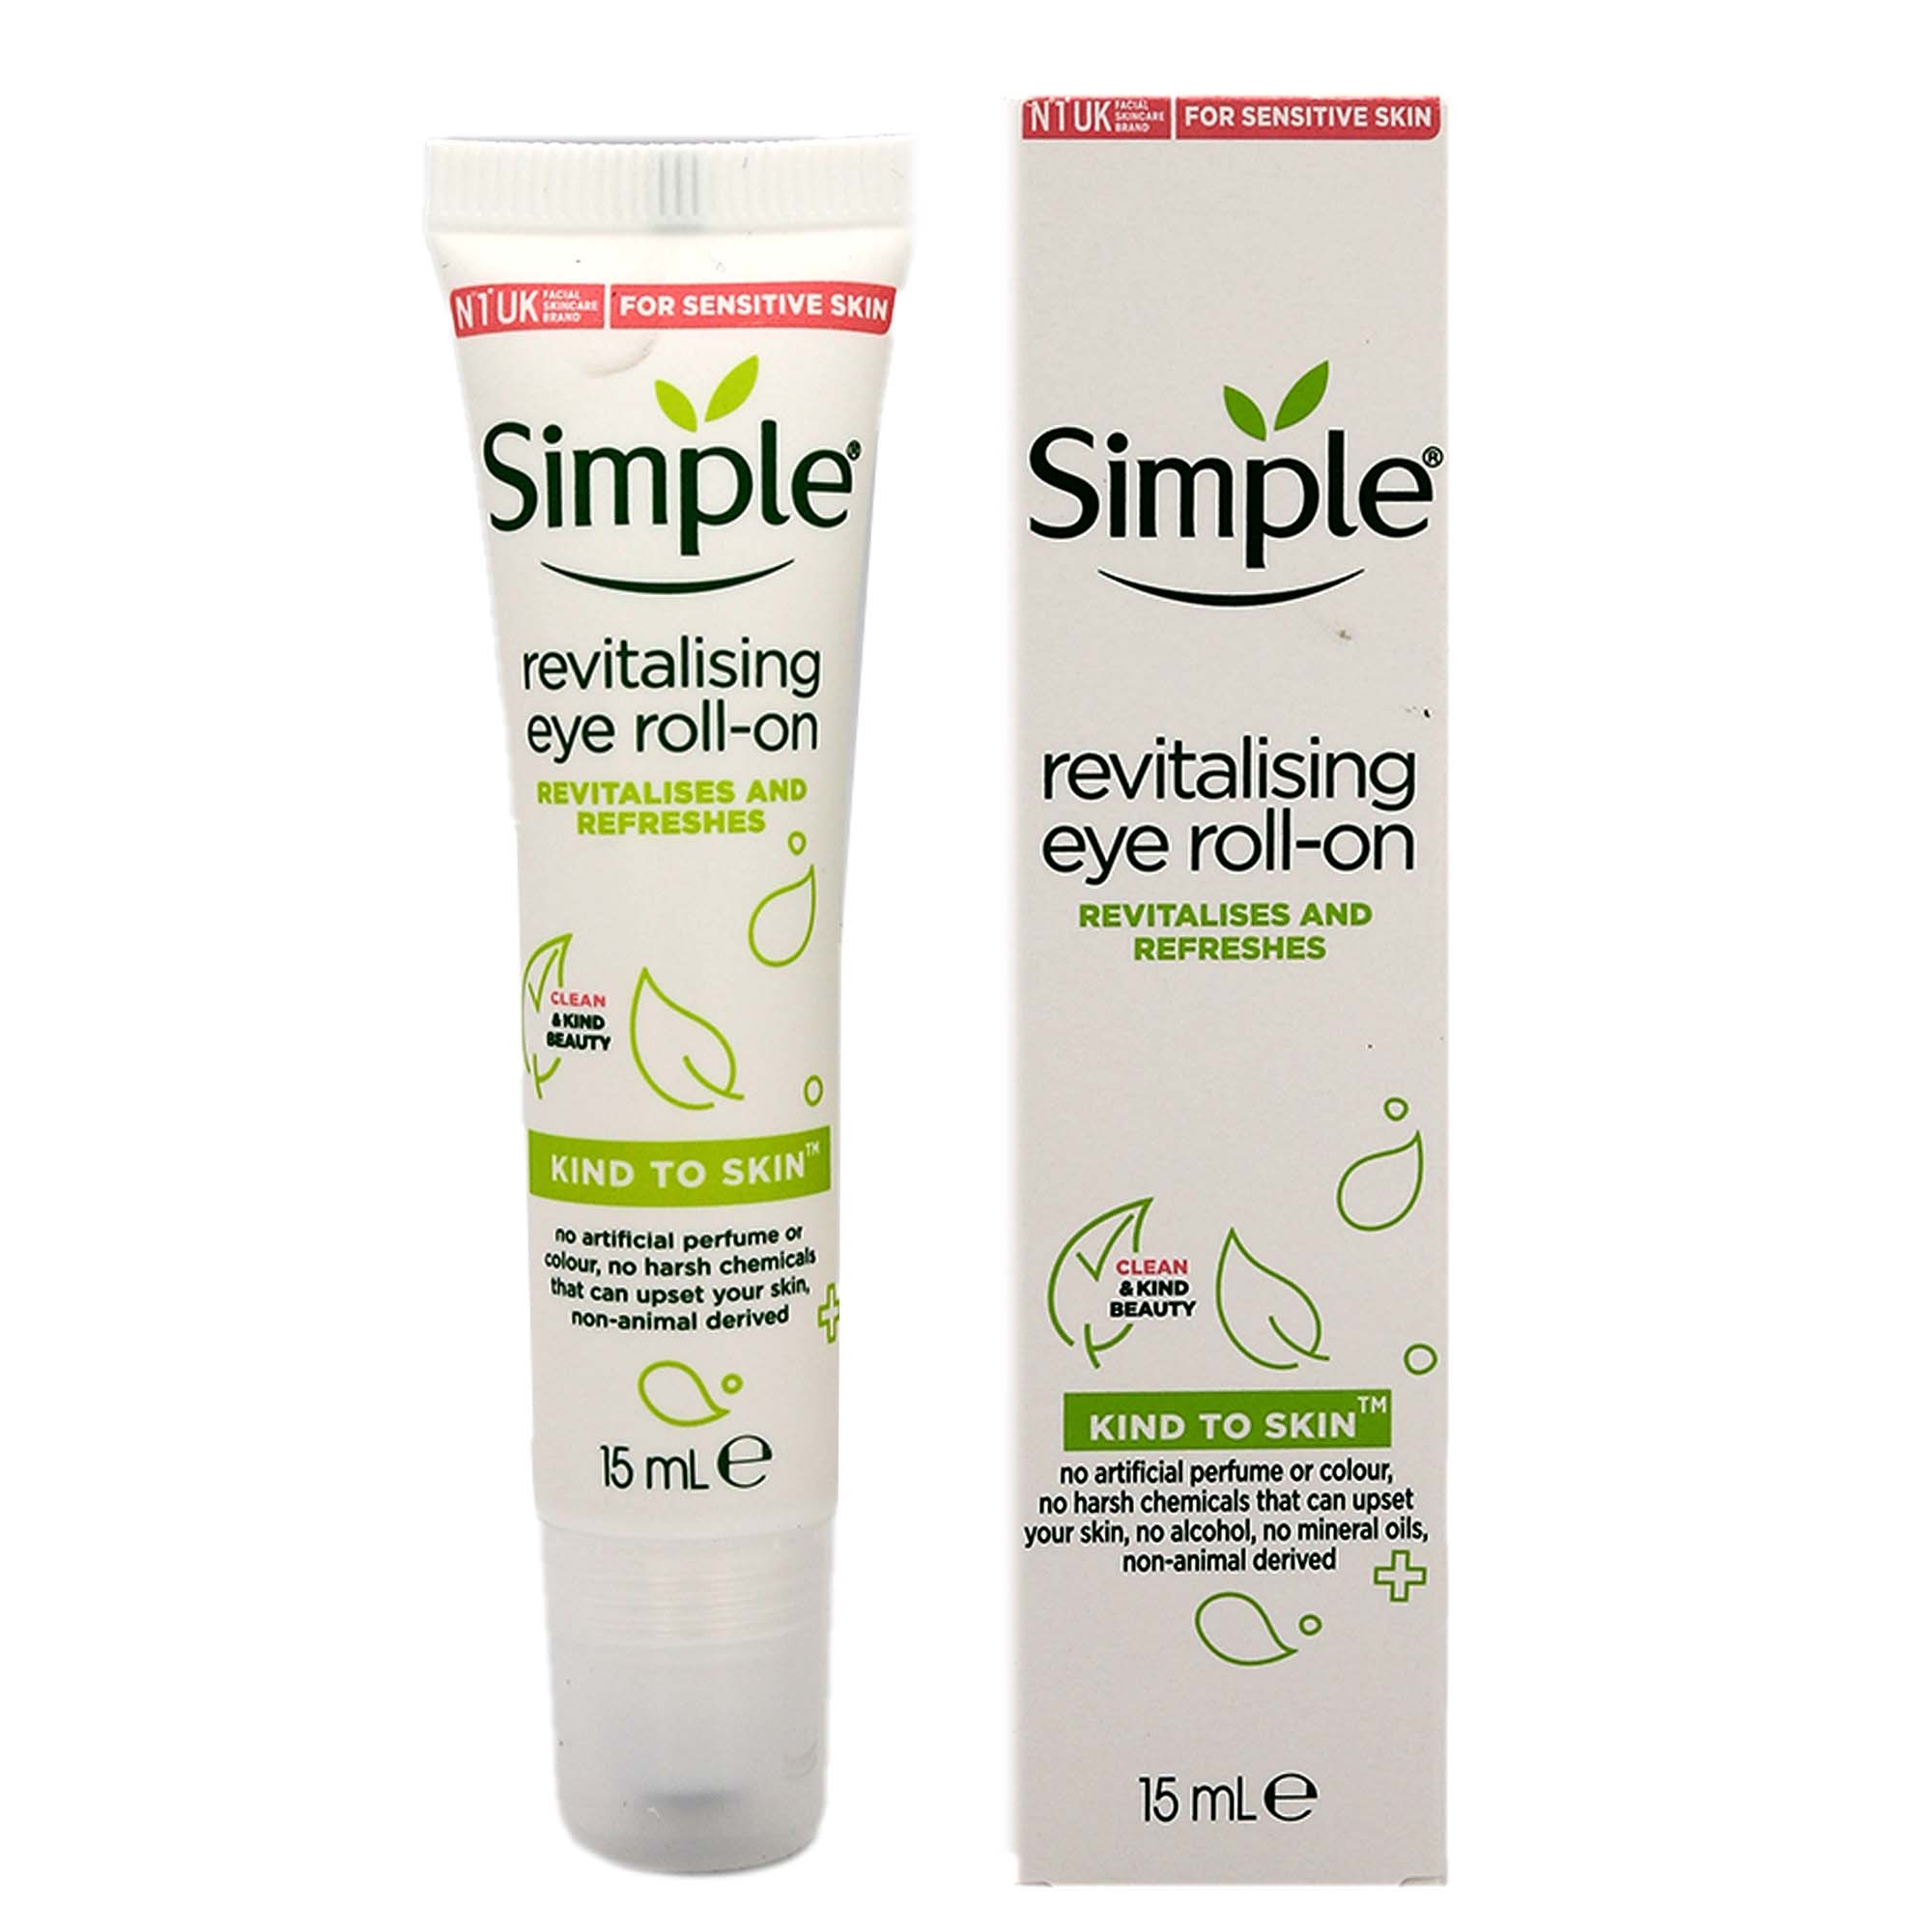 SIMPLE SIMPLE RULTER ROLE Cream - 15ml